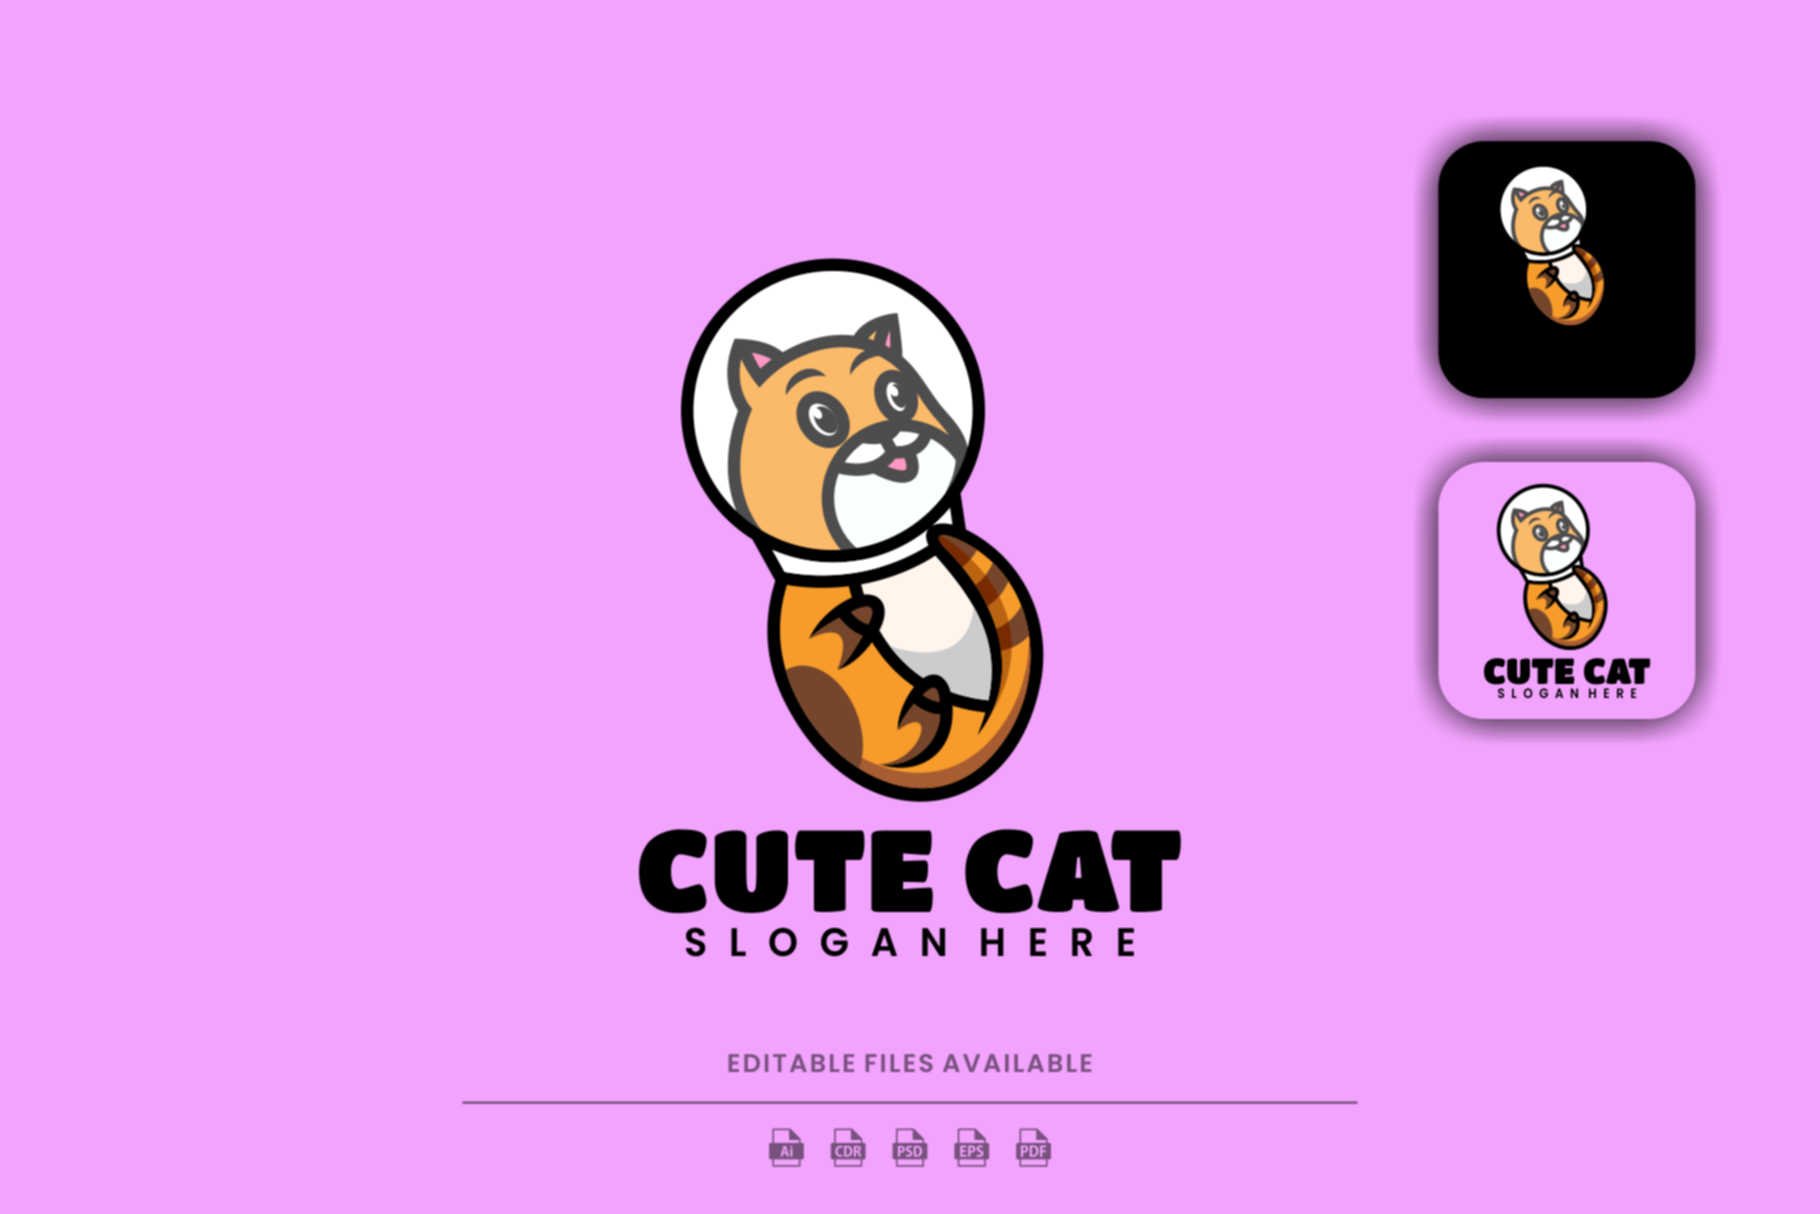 Cute Cat Simple Mascot Logo cover image.